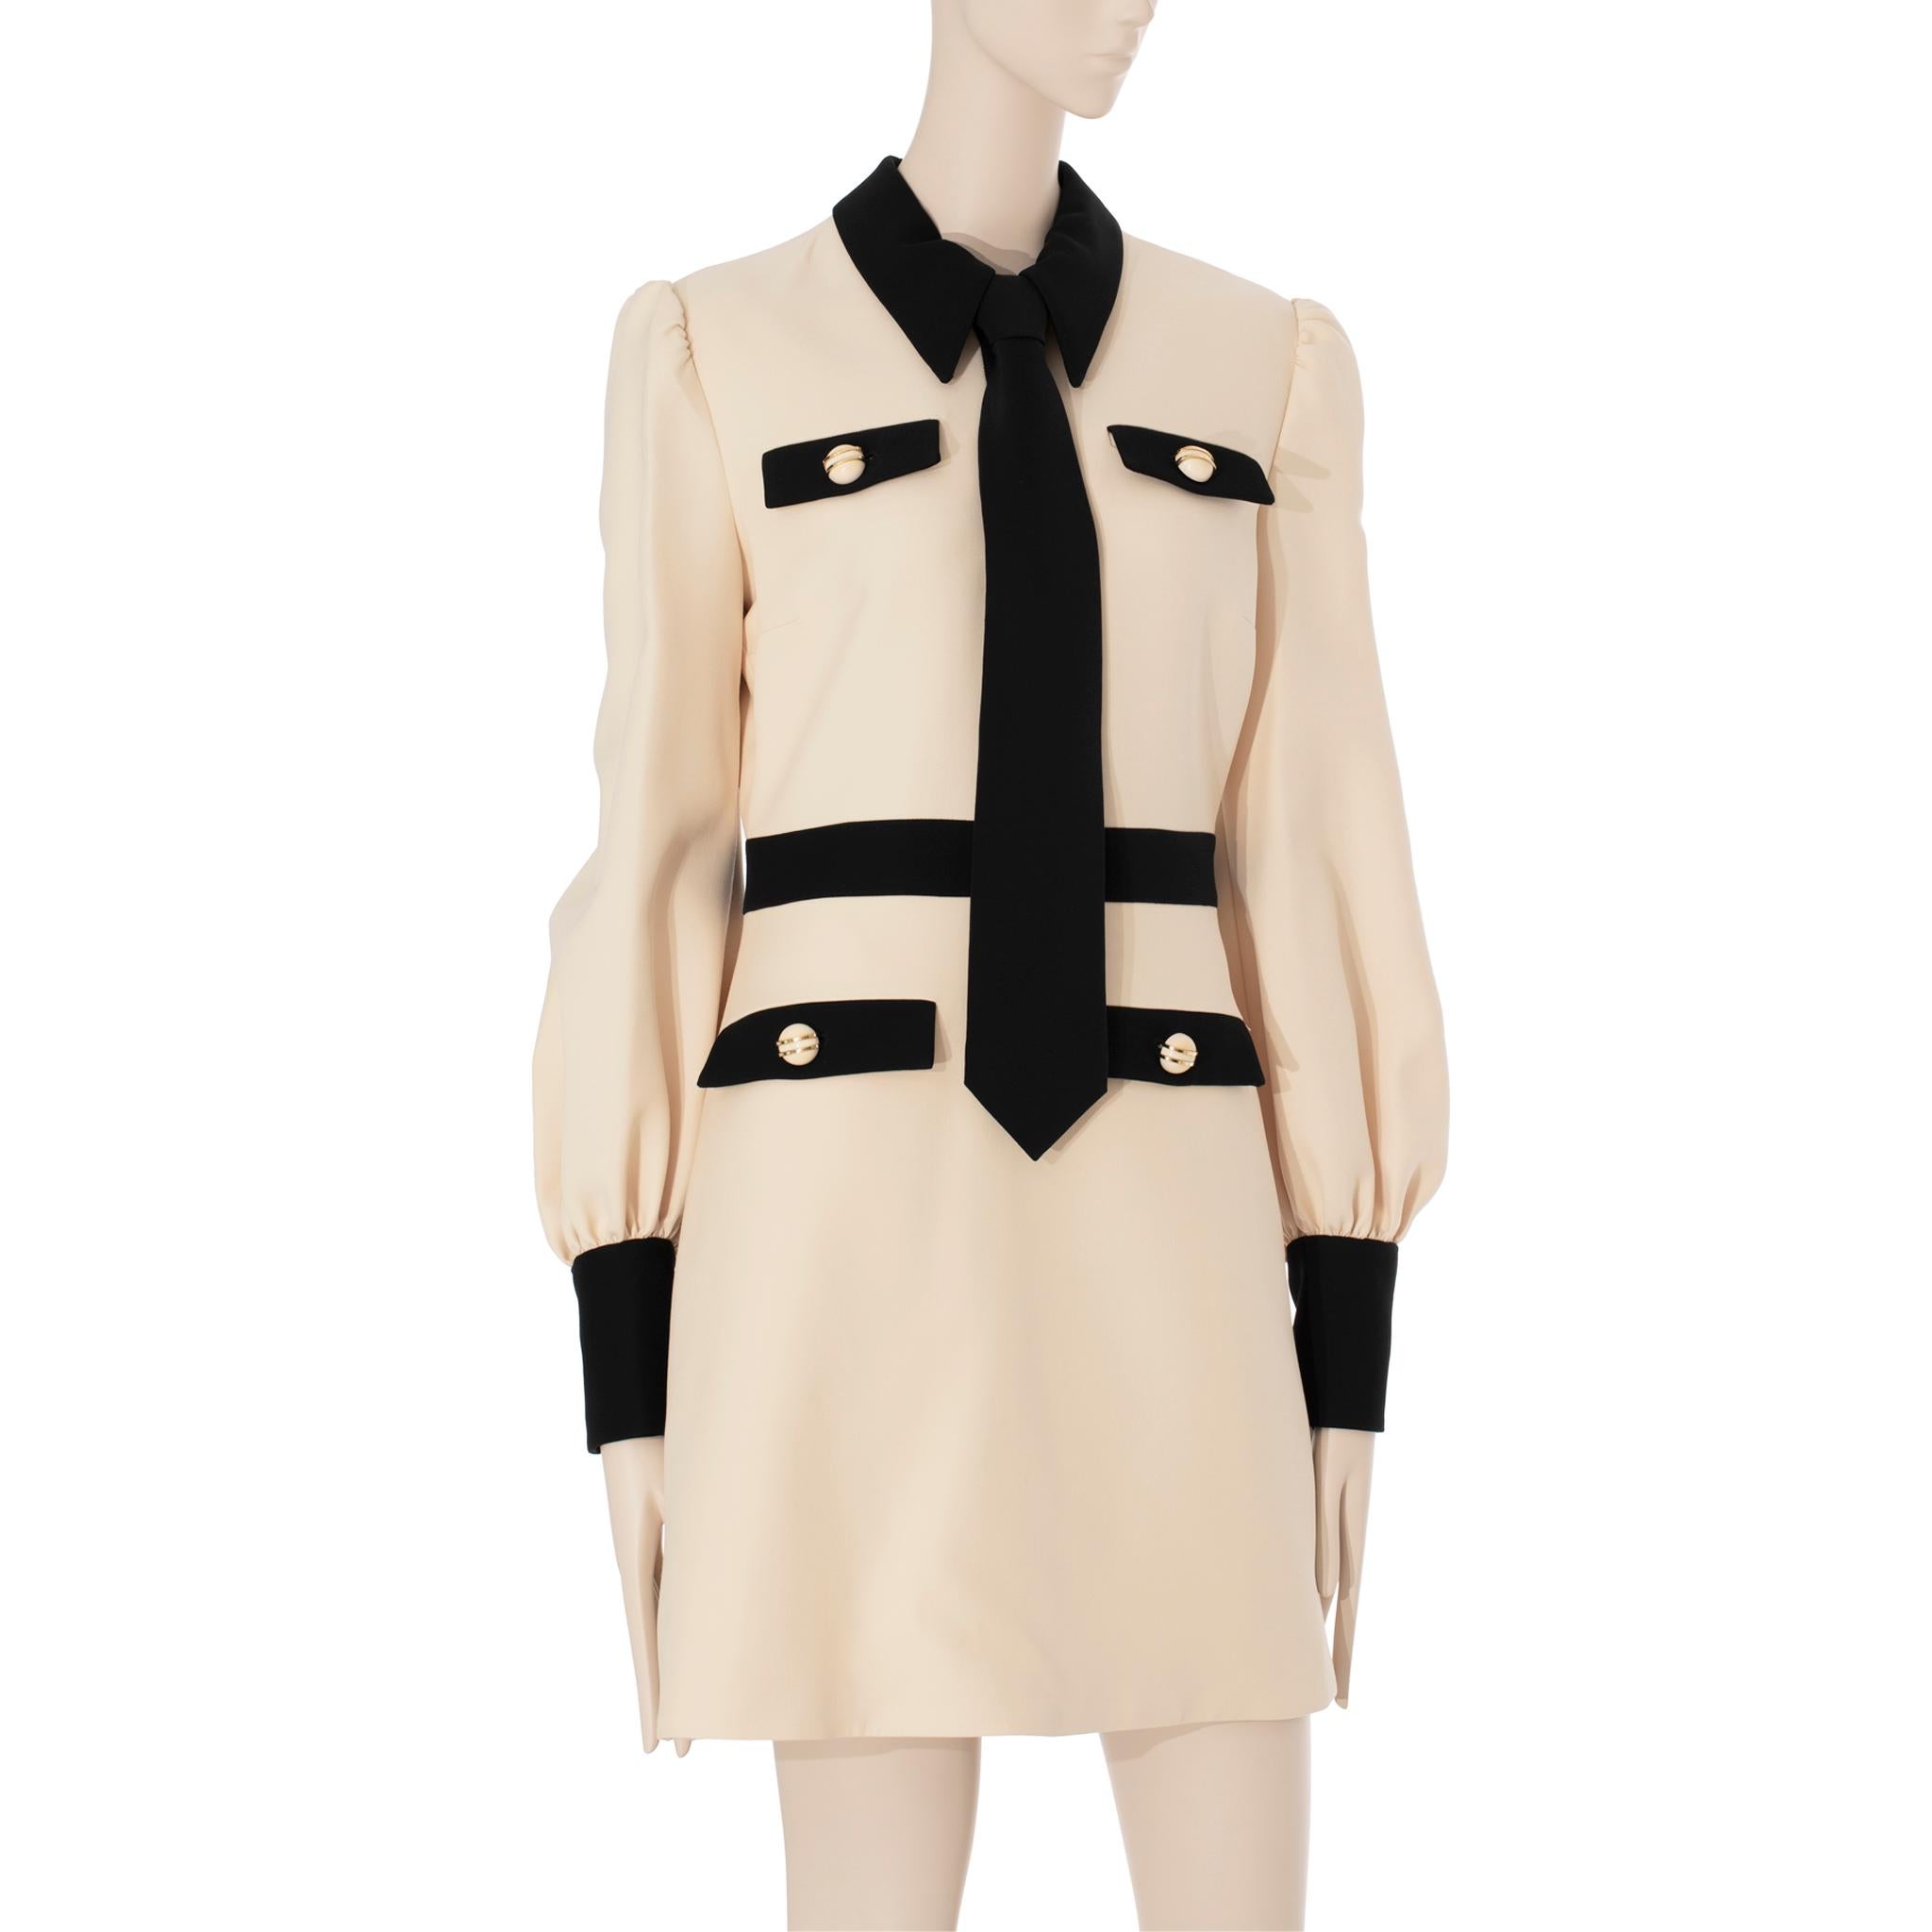 Gucci Long Sleeve Dress With Tie Ivory & Black Wool & Silk 40 IT 4